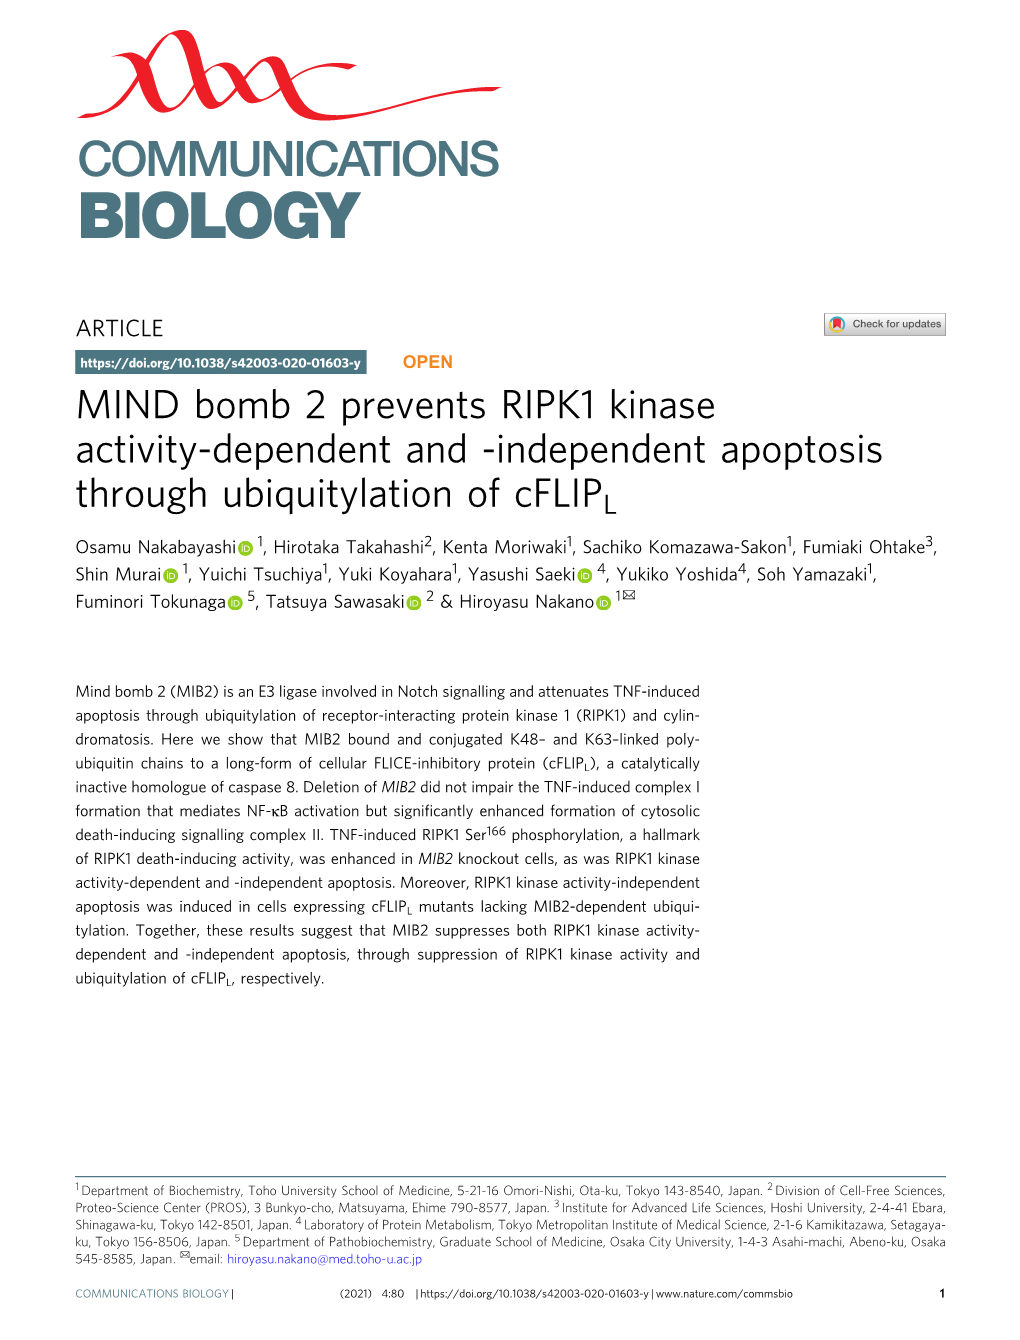 MIND Bomb 2 Prevents RIPK1 Kinase Activity-Dependent and -Independent Apoptosis Through Ubiquitylation of Cflipl